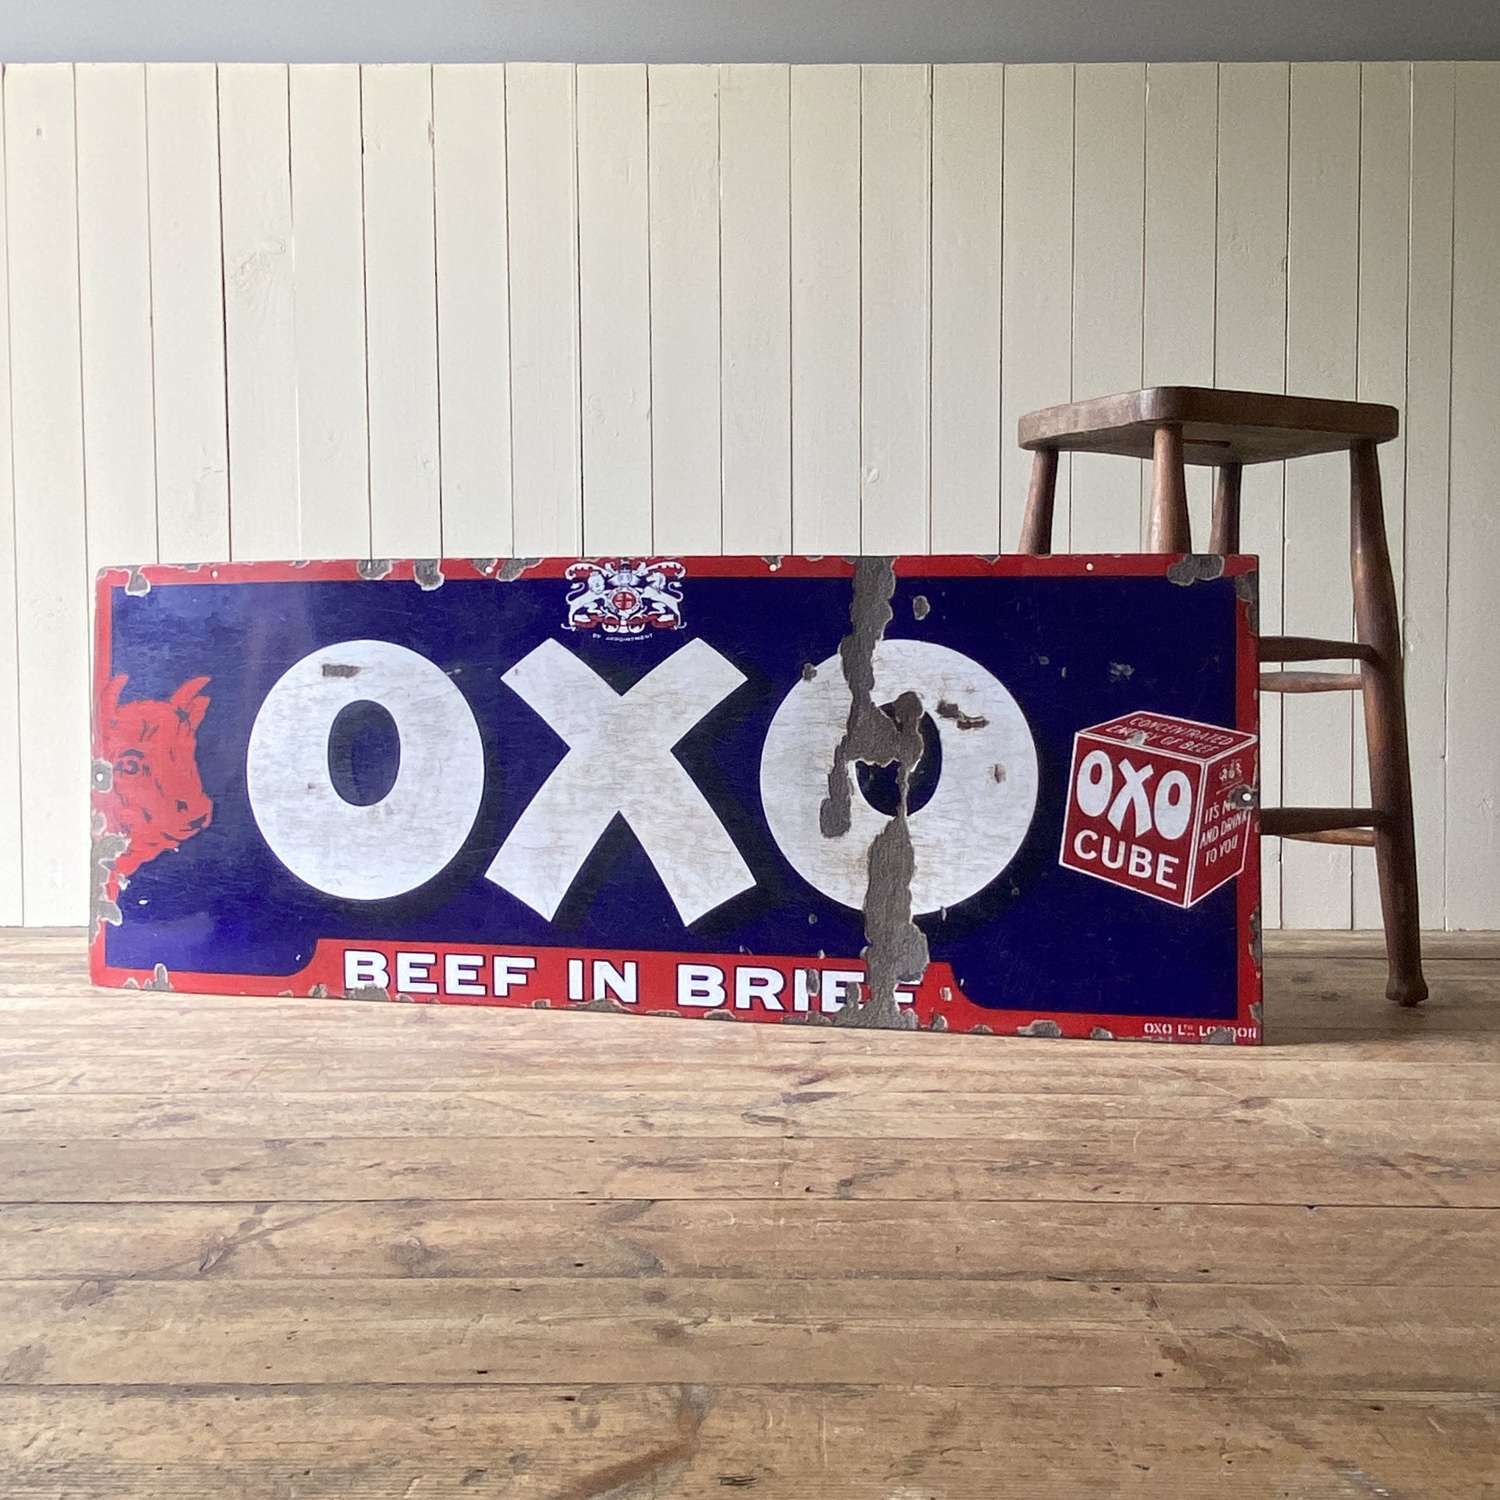 OXO enamel sign